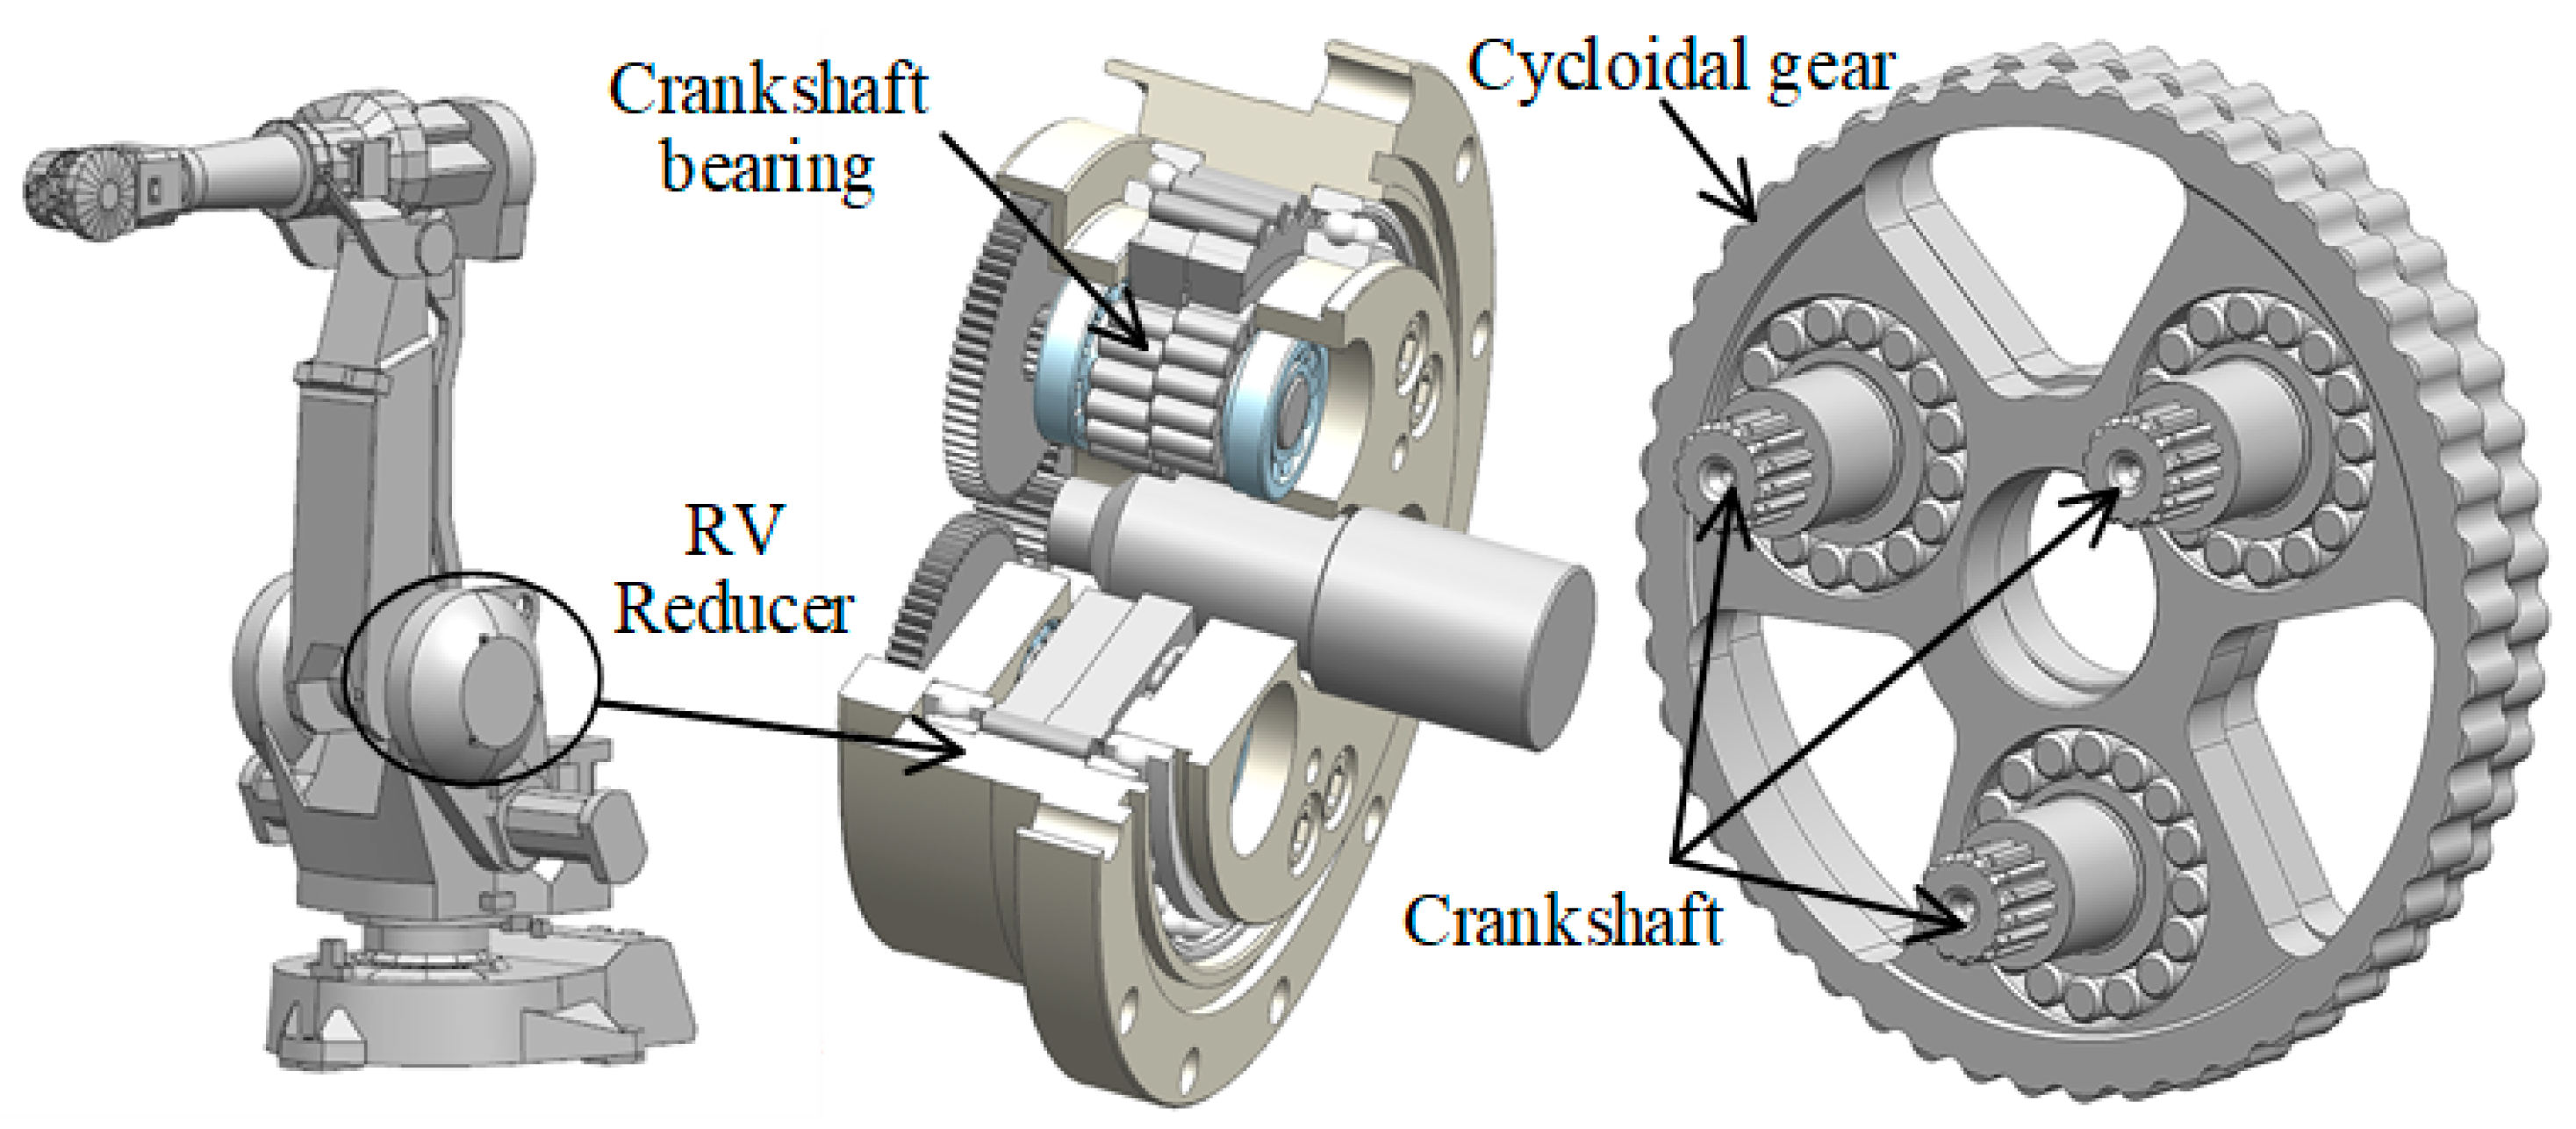 Cycloidal gears versus planetary gears